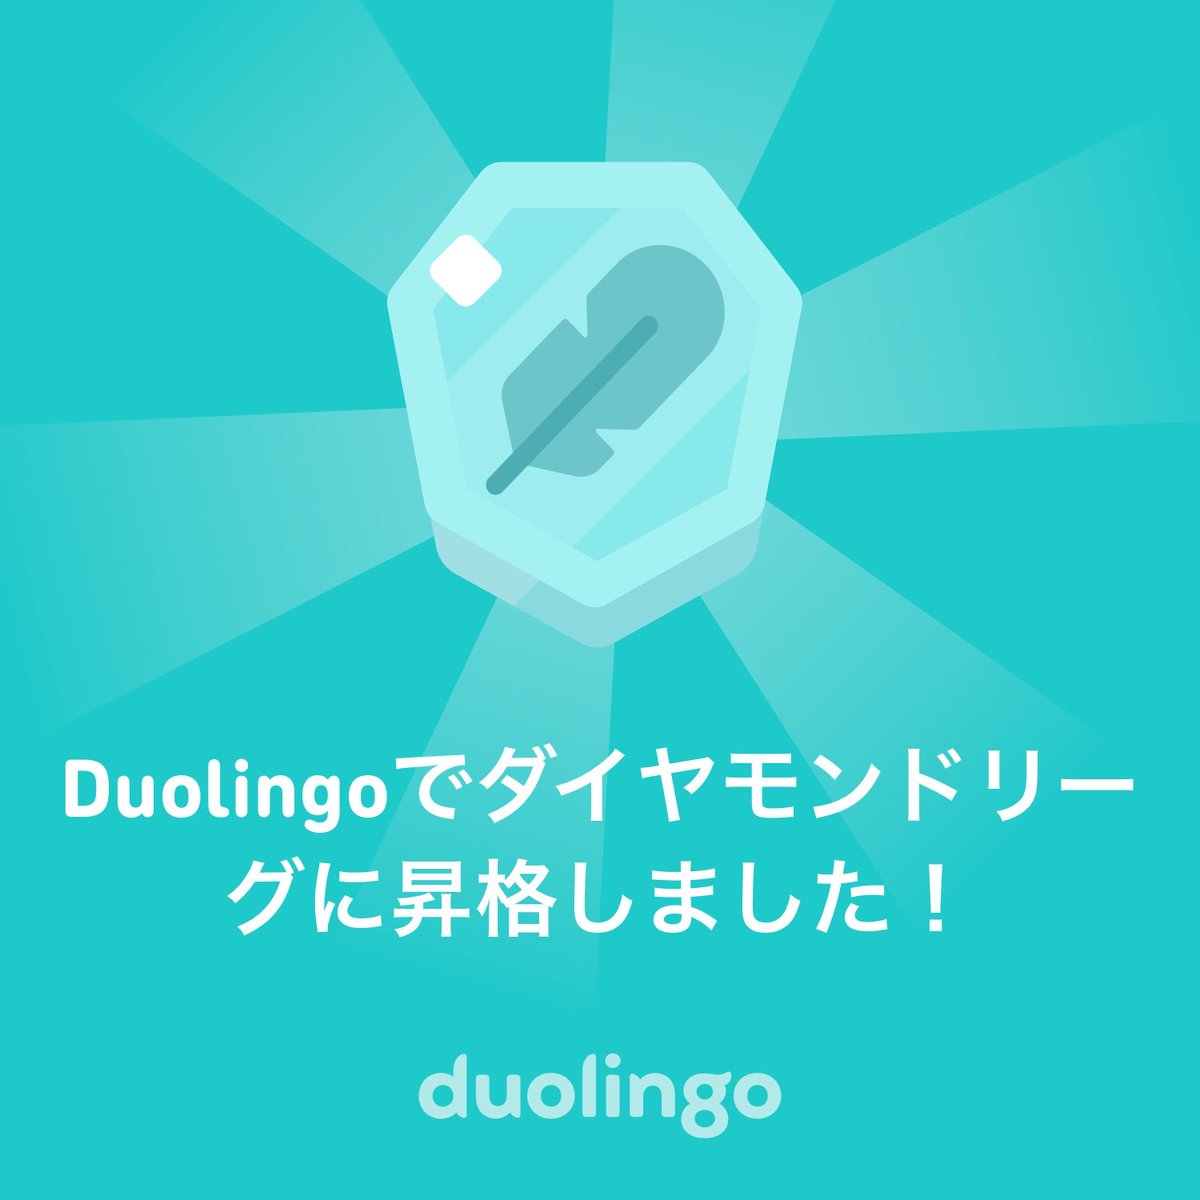 I reached Diamond League for the first time! :)
#Duolingo